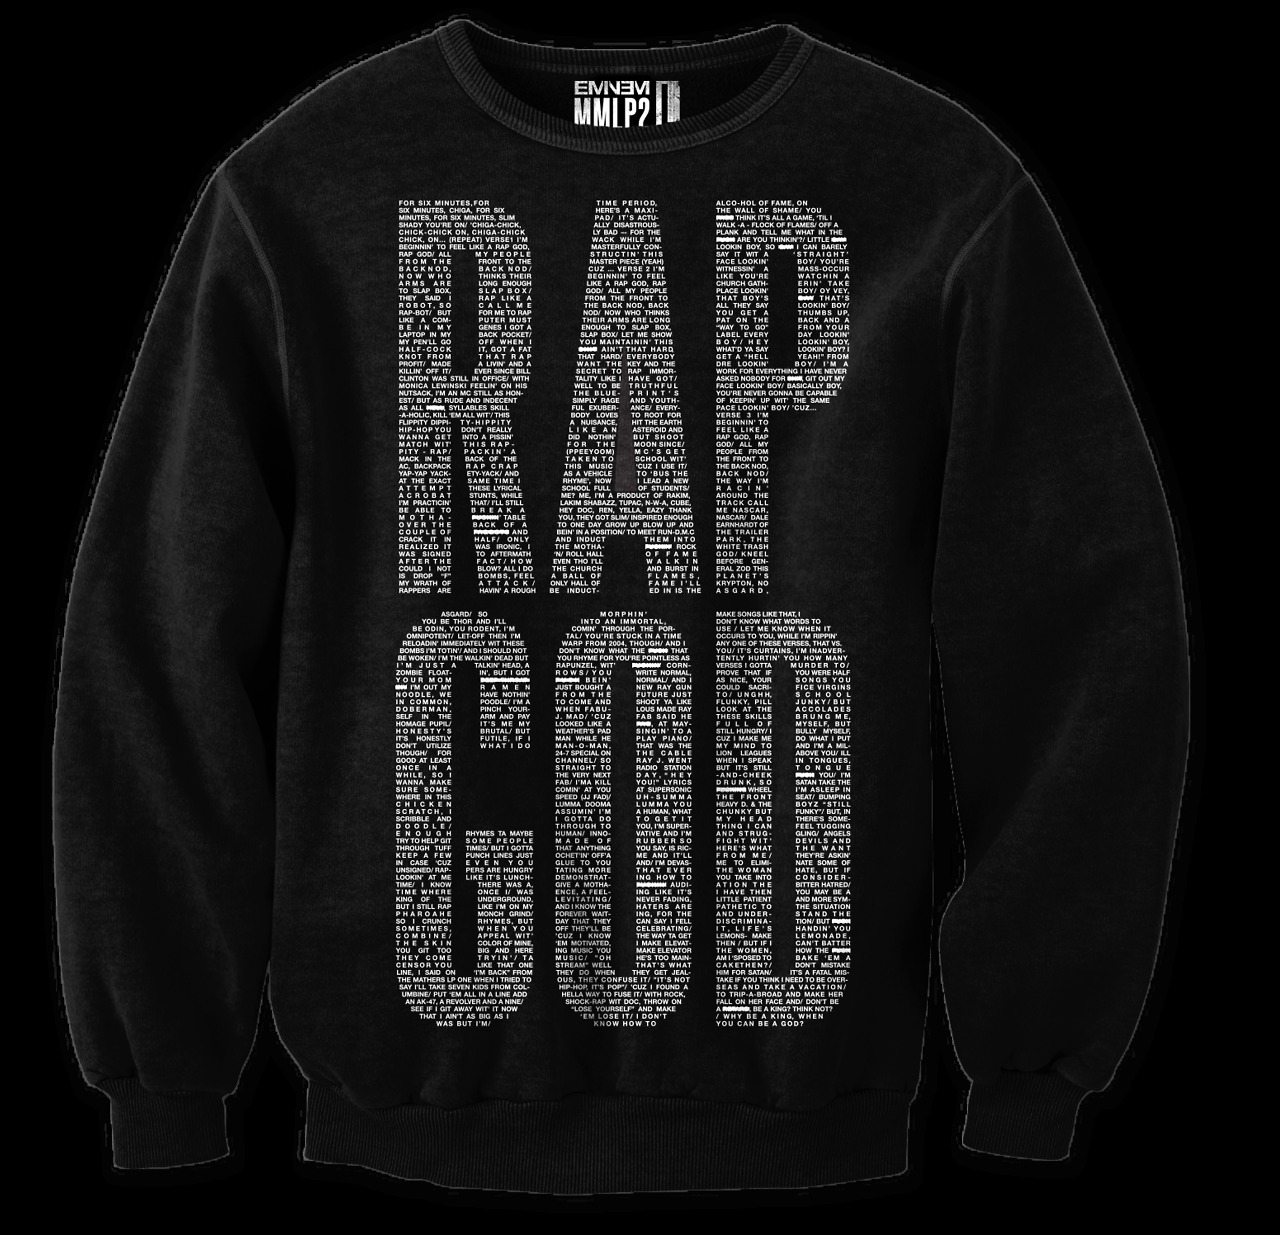 2013.11.20 - New Eminem limited RapGod merch